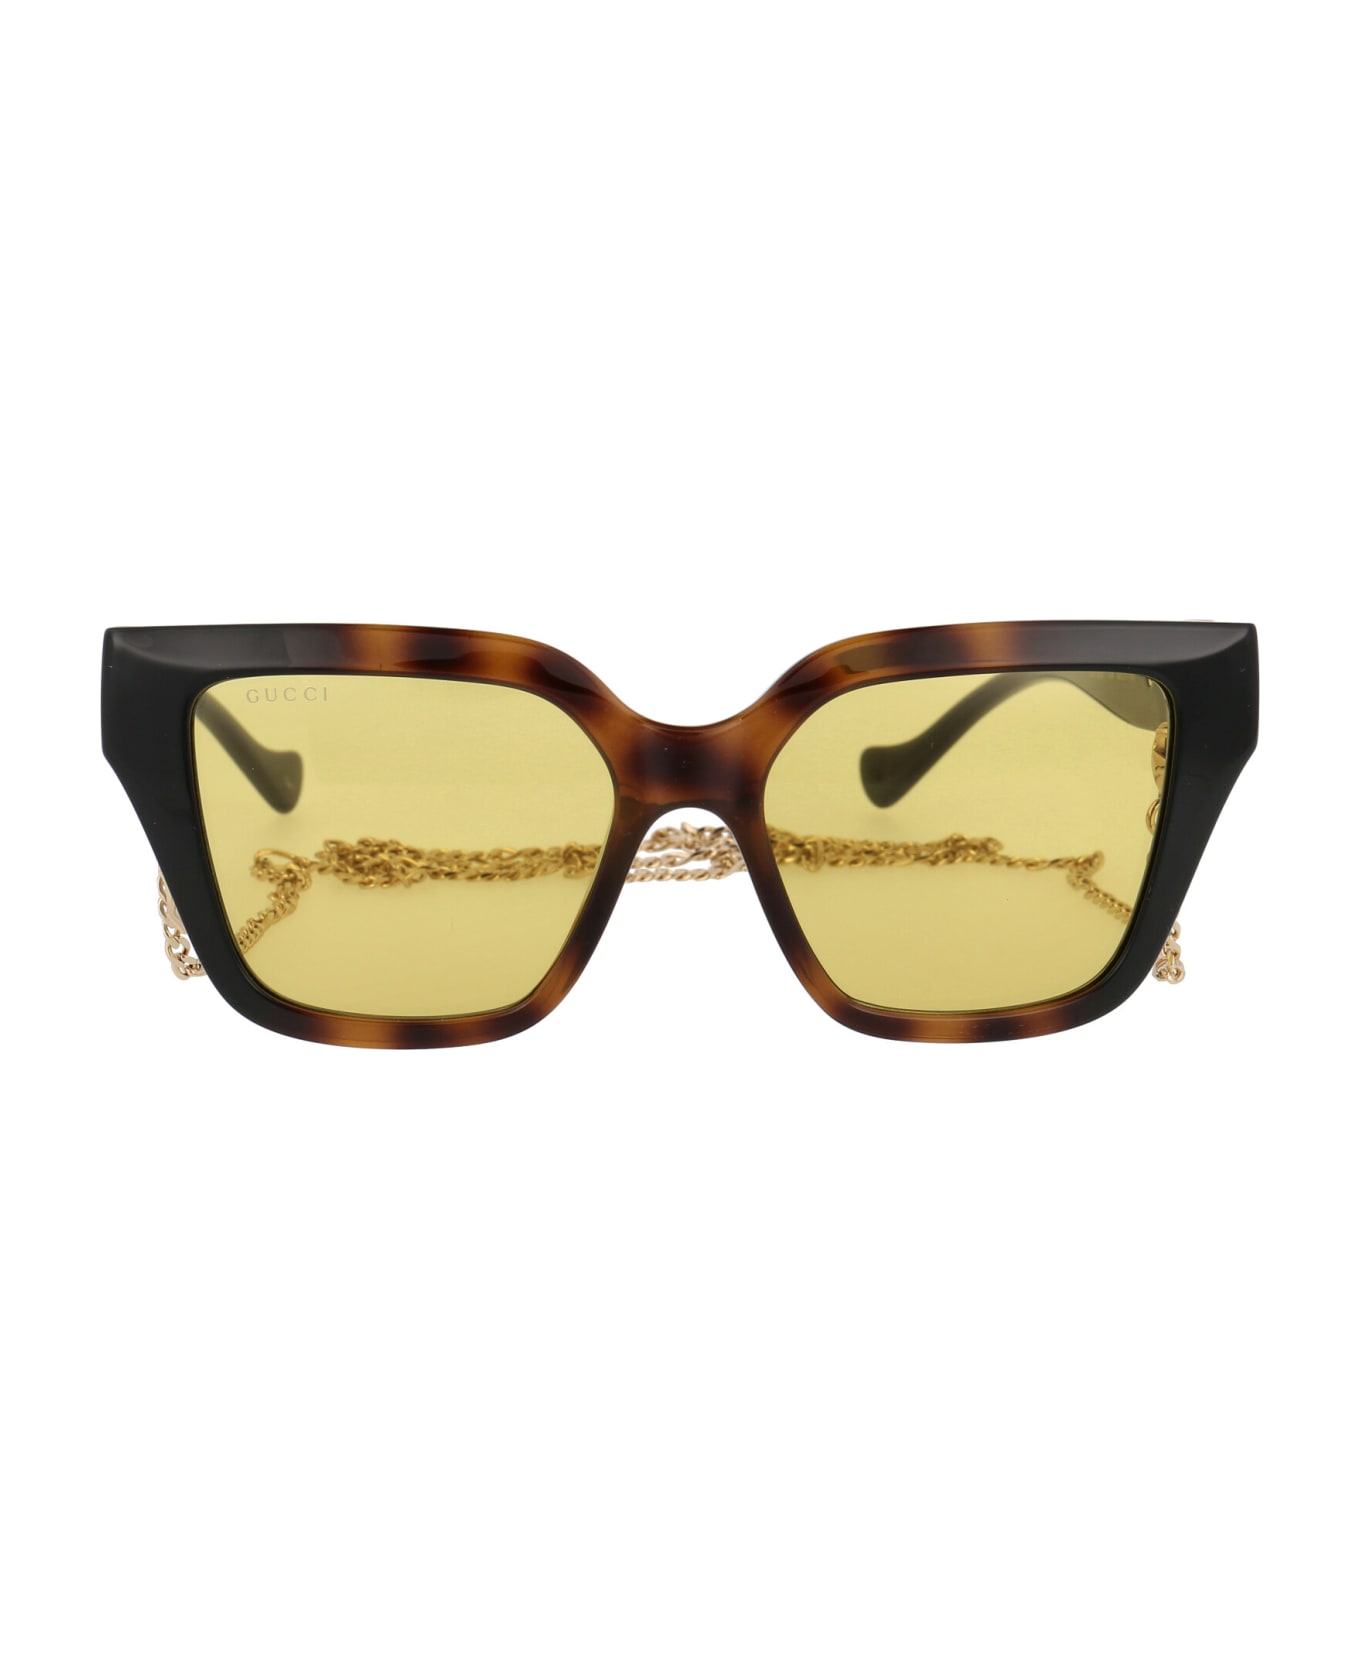 Gucci Eyewear Gg1023s Sunglasses - 004 HAVANA BLACK YELLOW